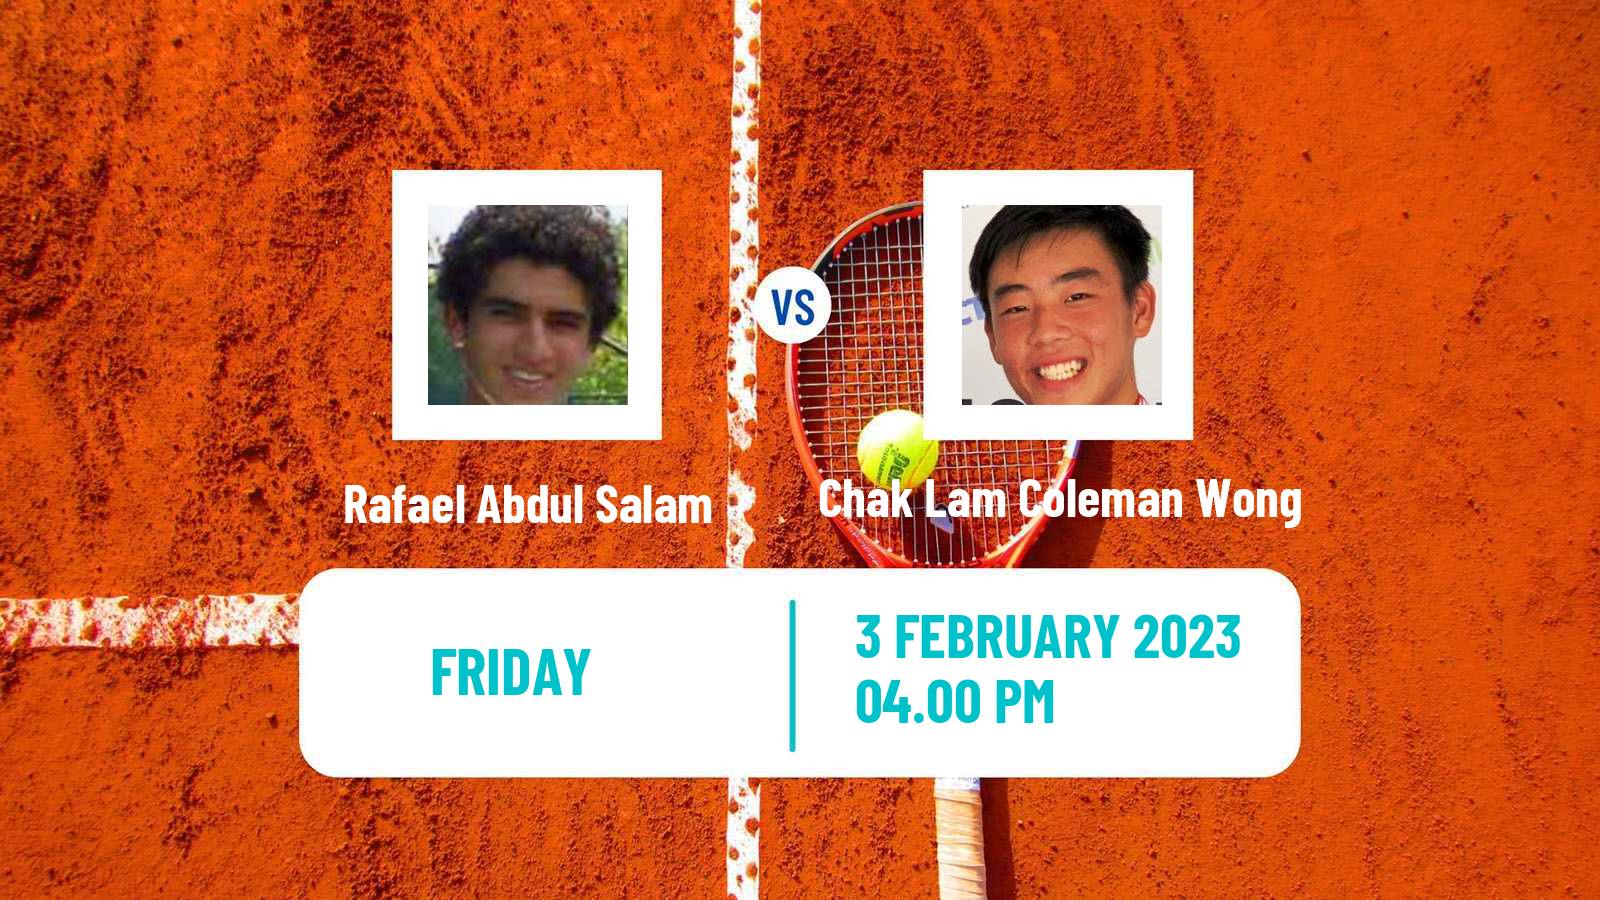 Tennis Davis Cup World Group II Rafael Abdul Salam - Chak Lam Coleman Wong